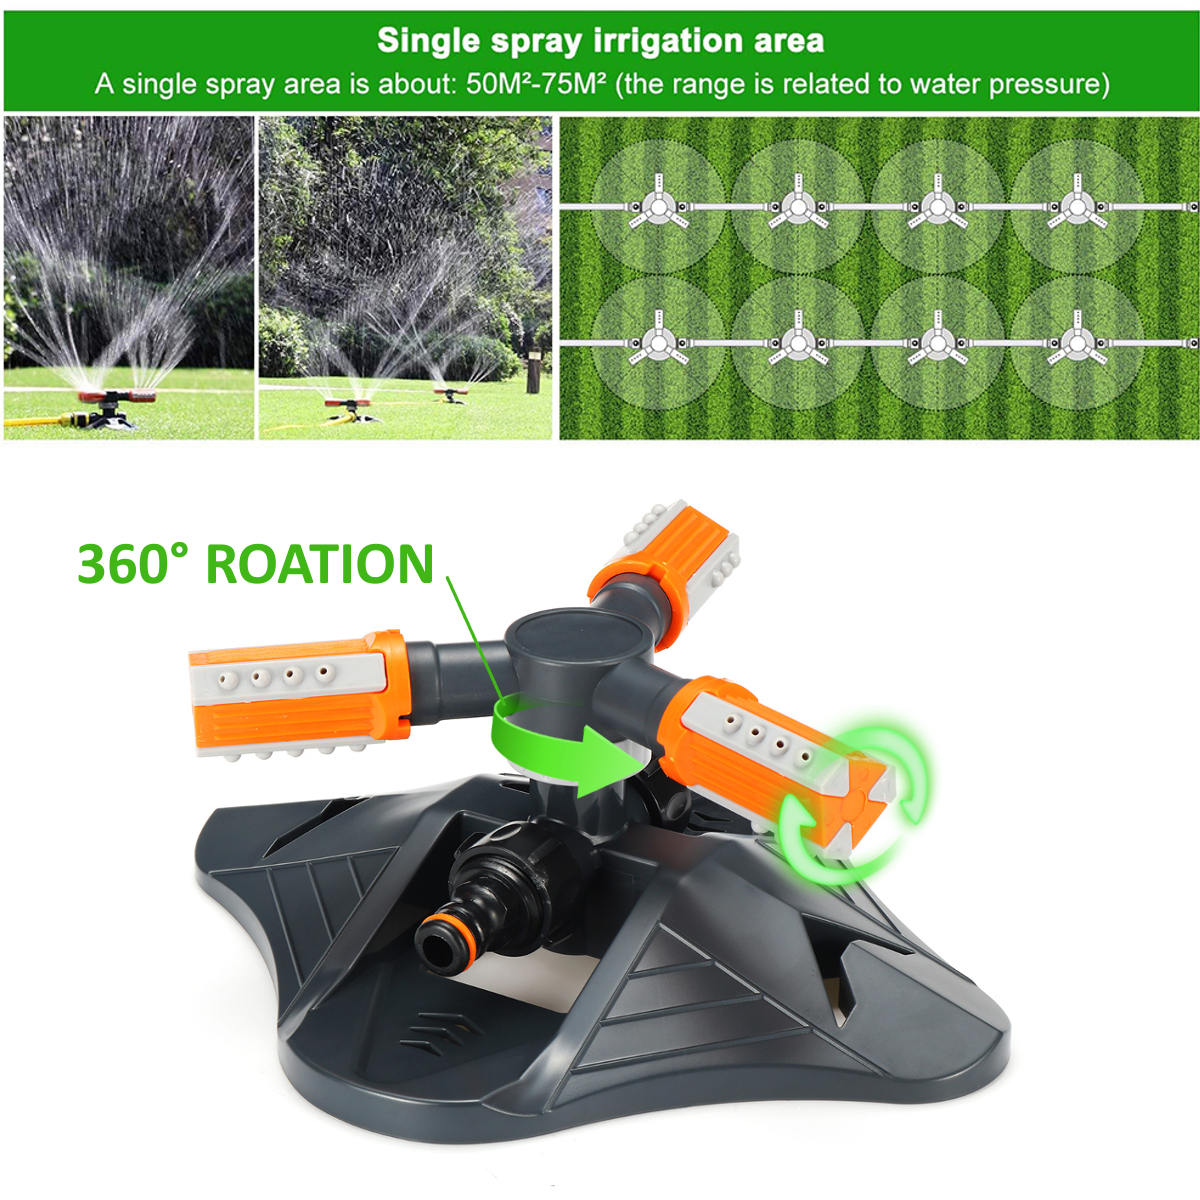 3-Arms-Automatic-360deg-Rotation-Lawn-Sprinkler-Spray-Head-Garden-Irrigation-Watering-Tool-1828211-3